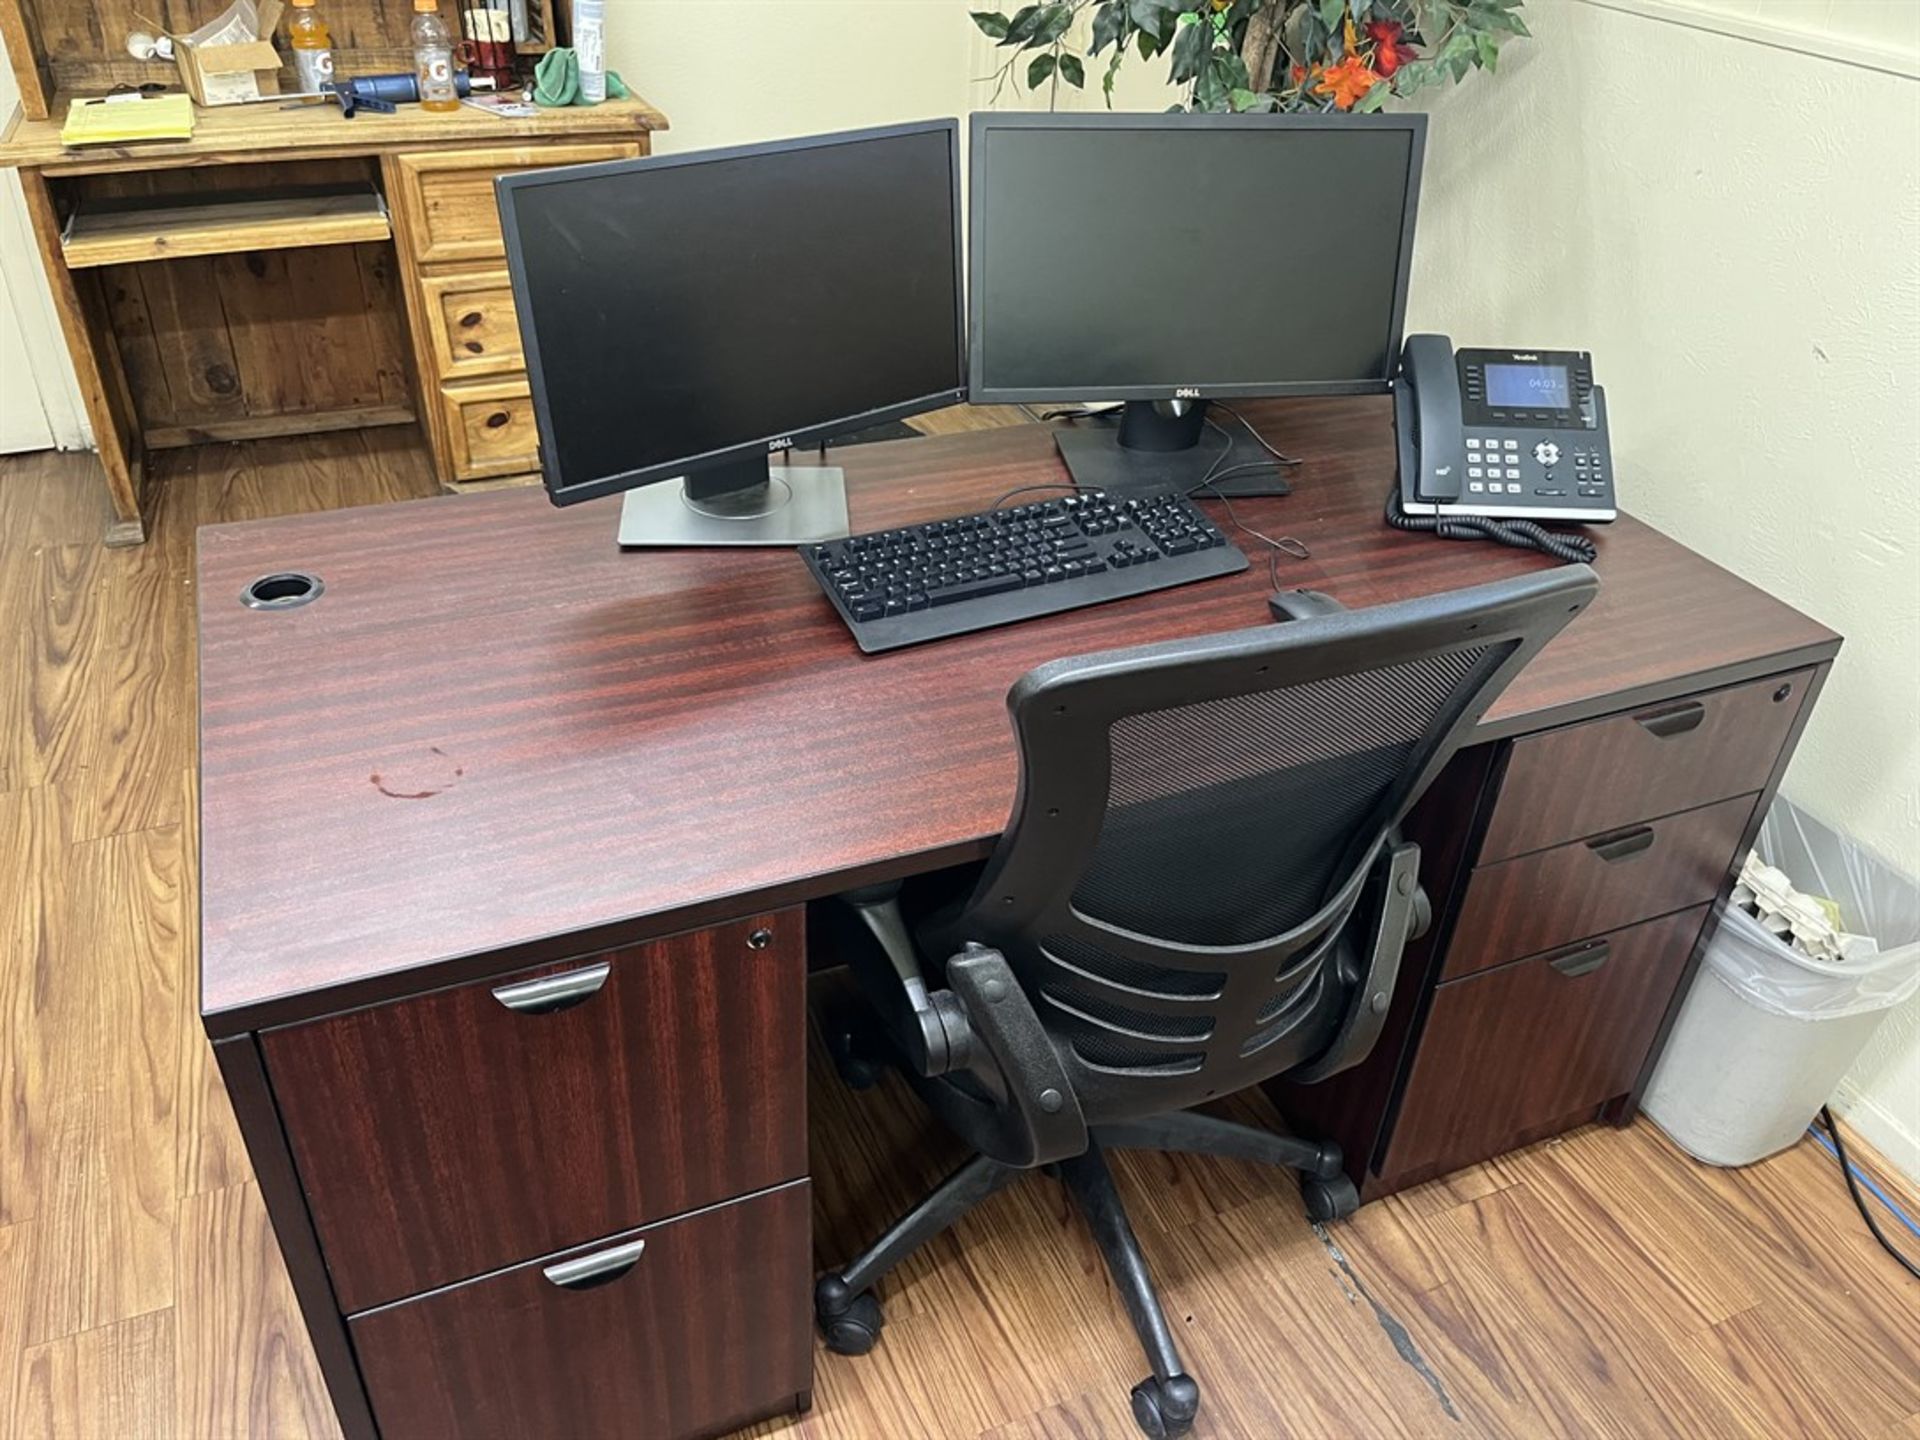 Lot consisting of Desk, Monitors, Cabinet